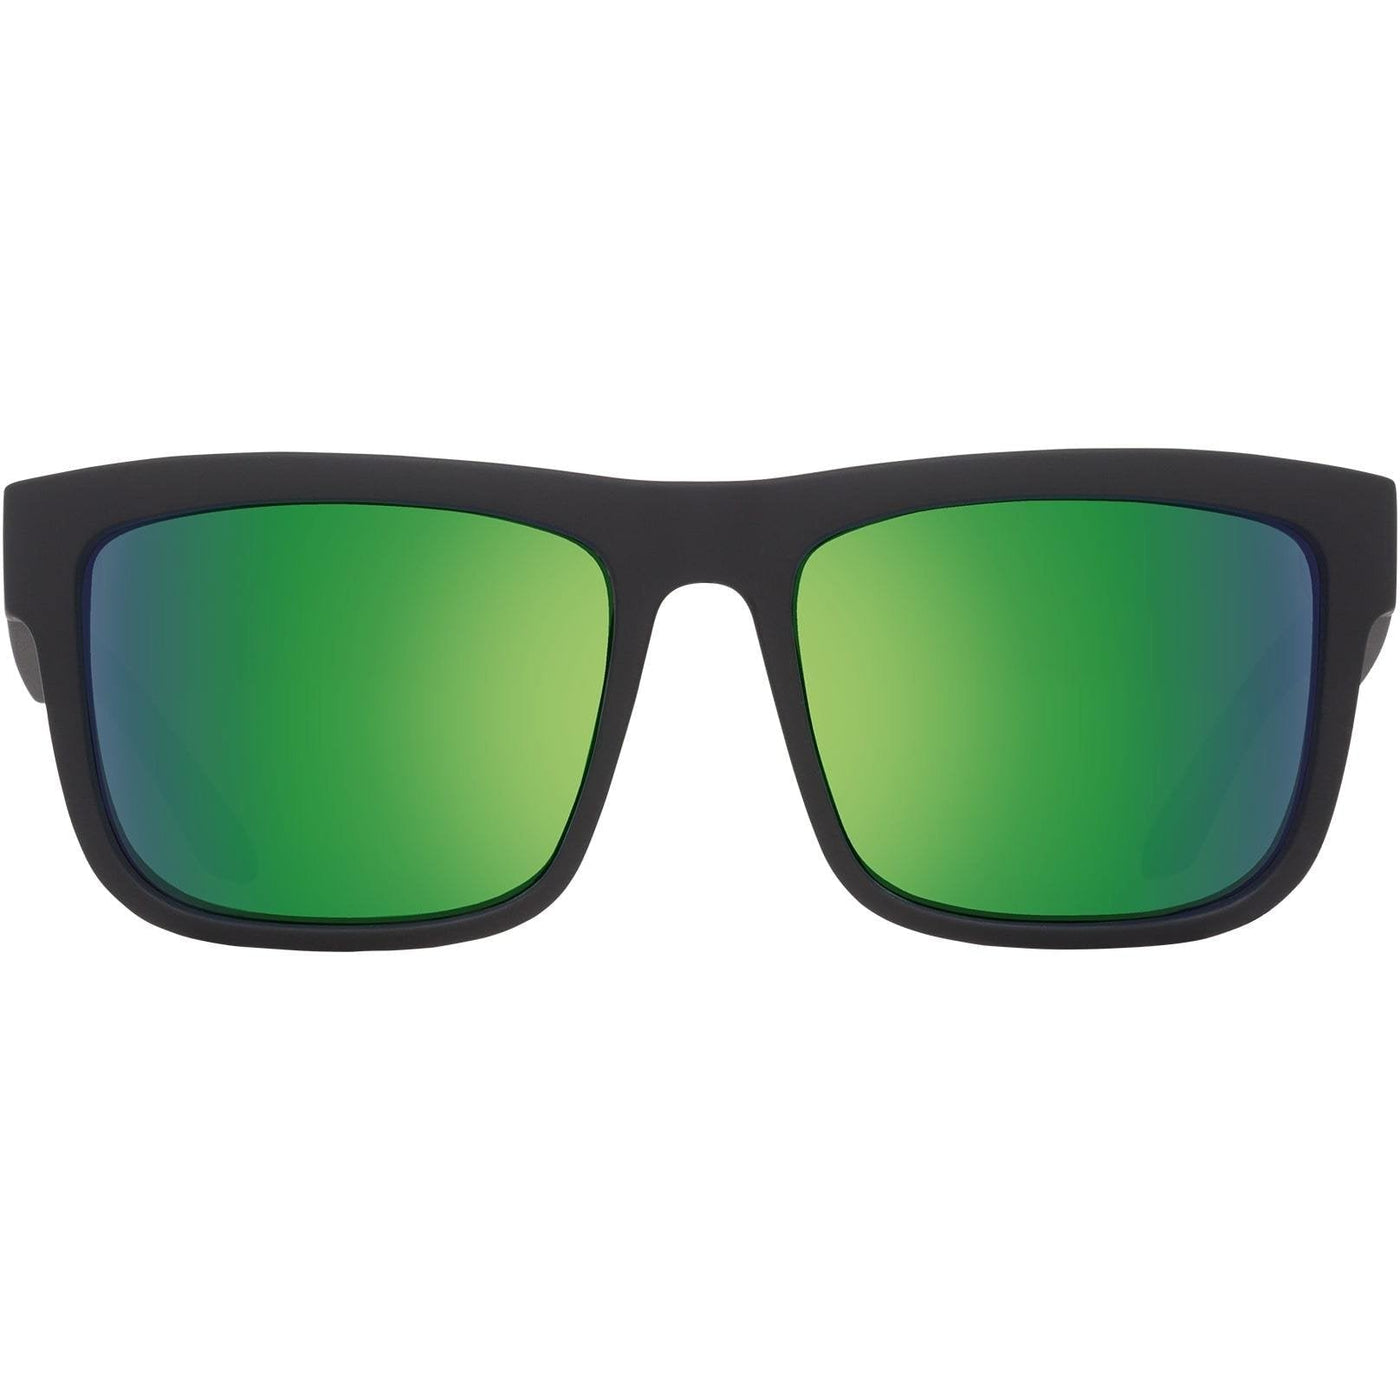 Green mirrored lens sunglasses